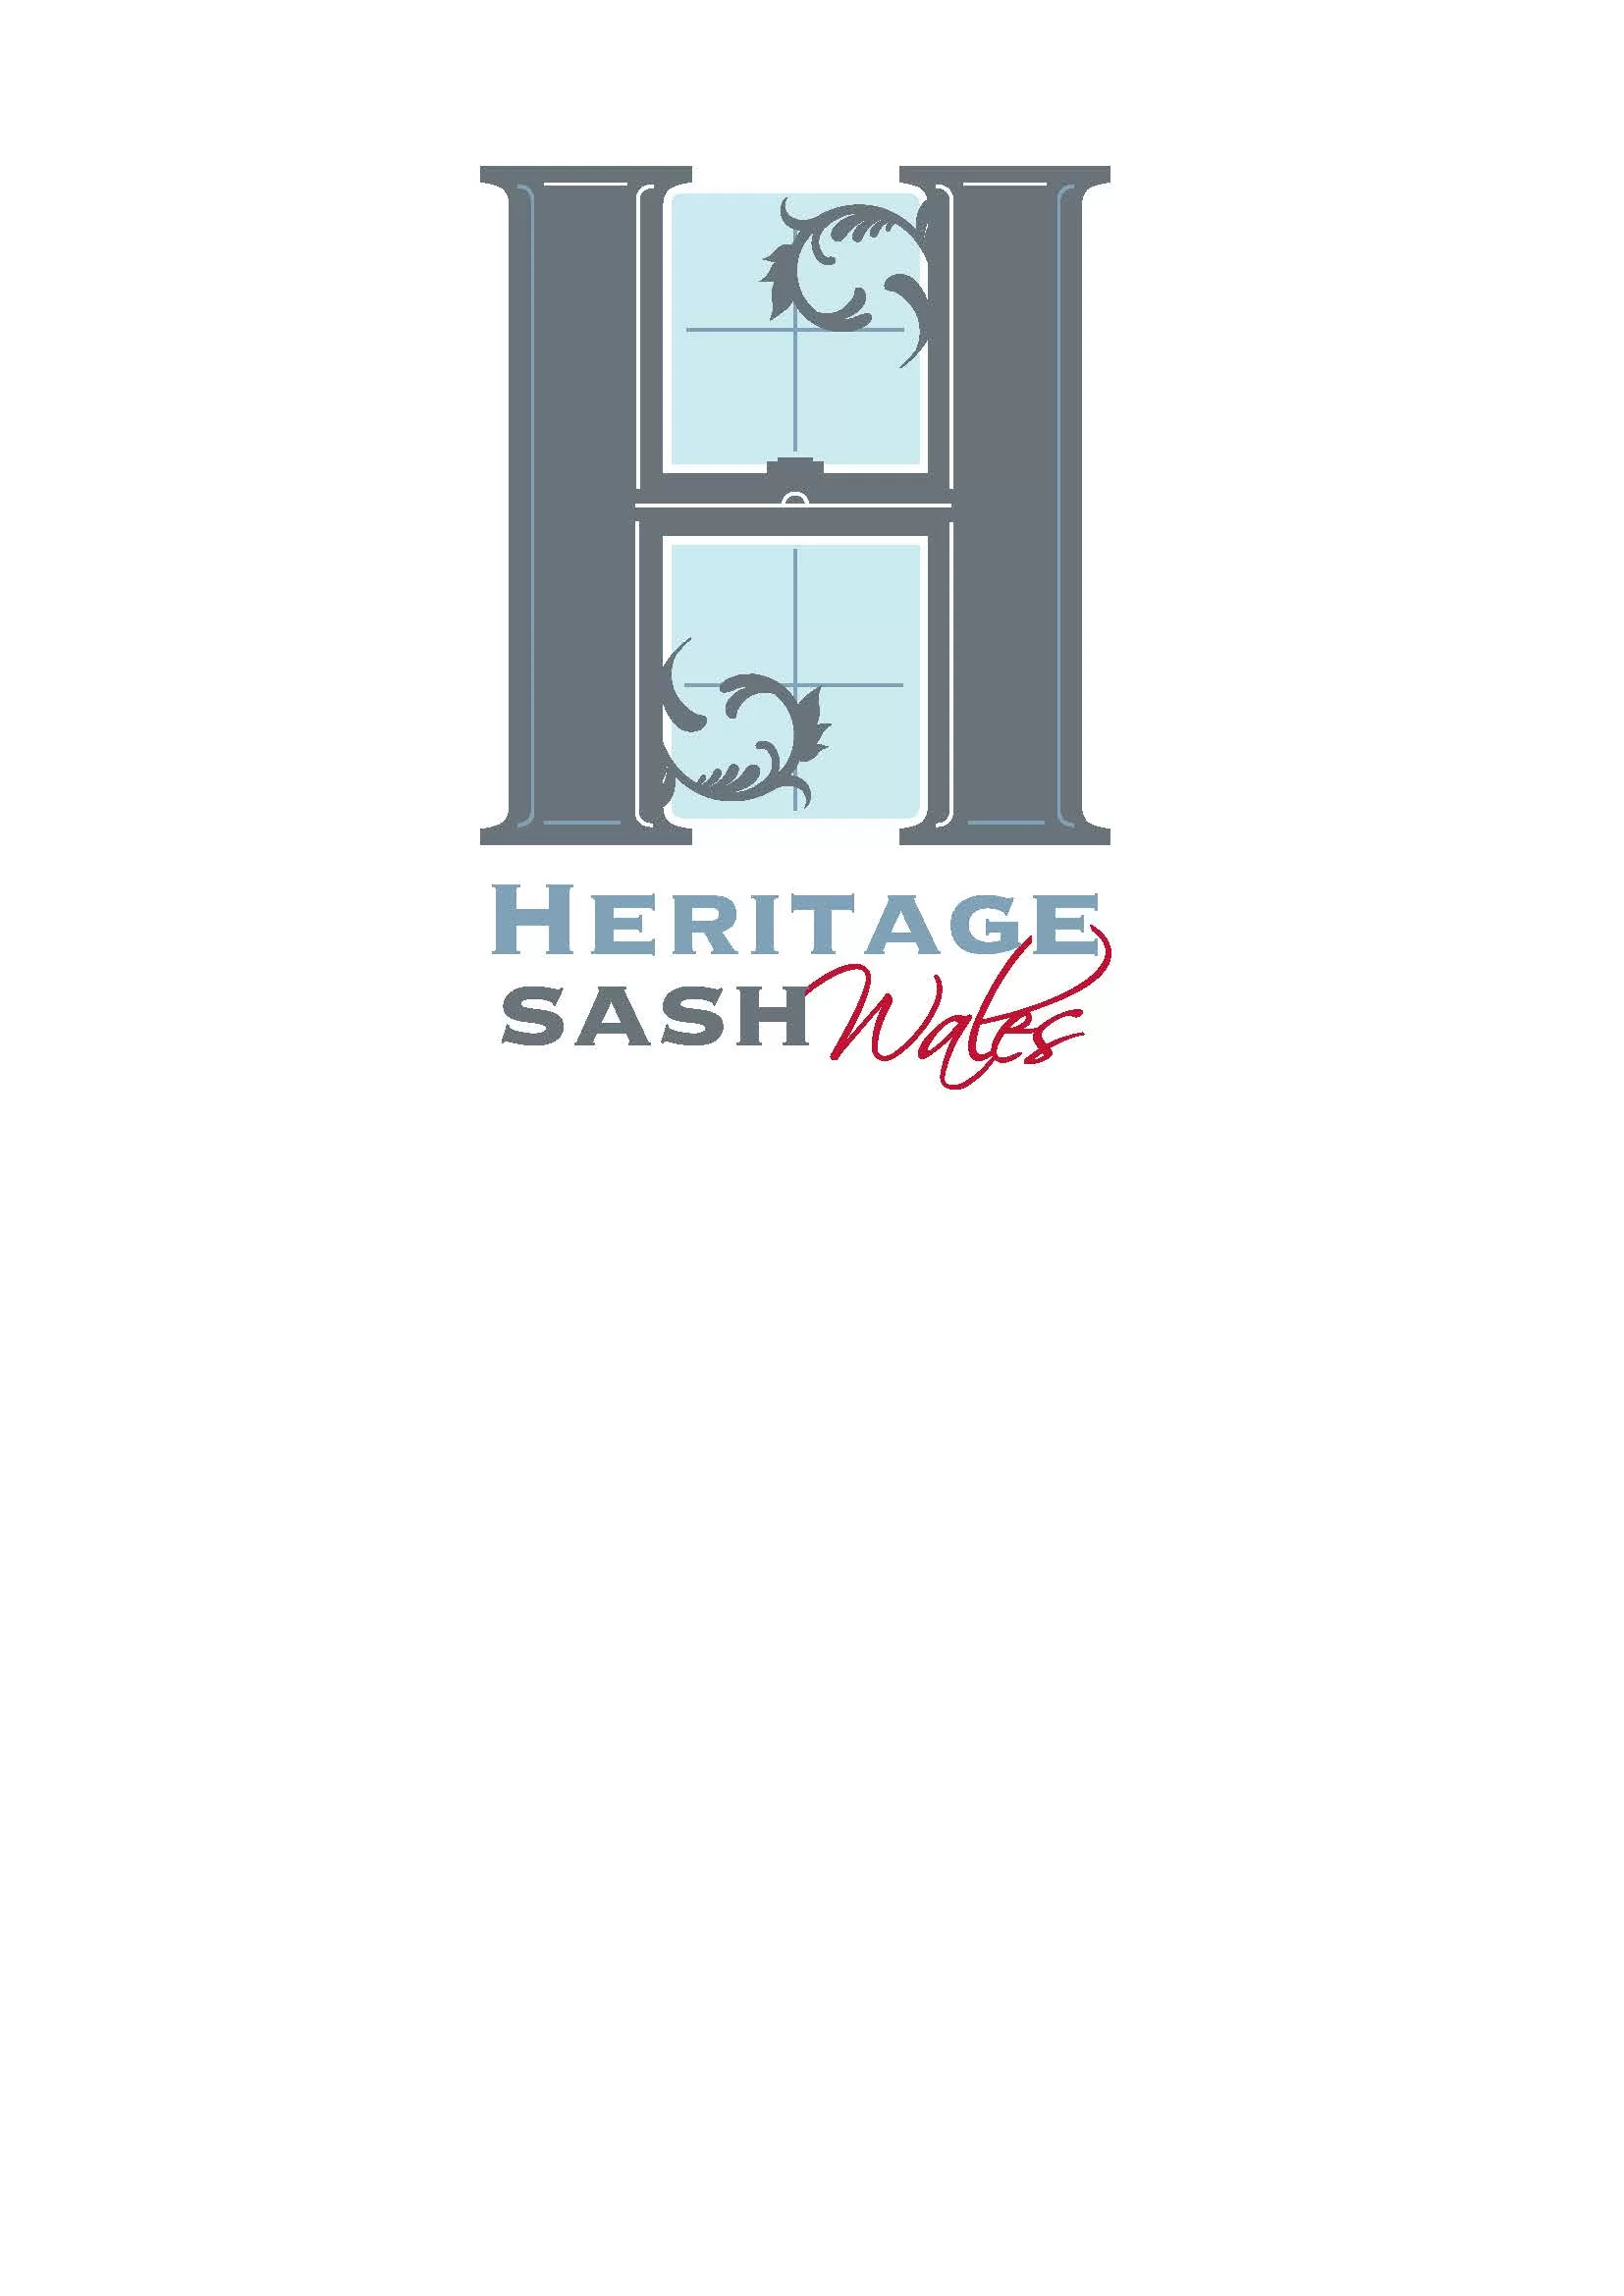 Heritage Sash Wales joinery logo